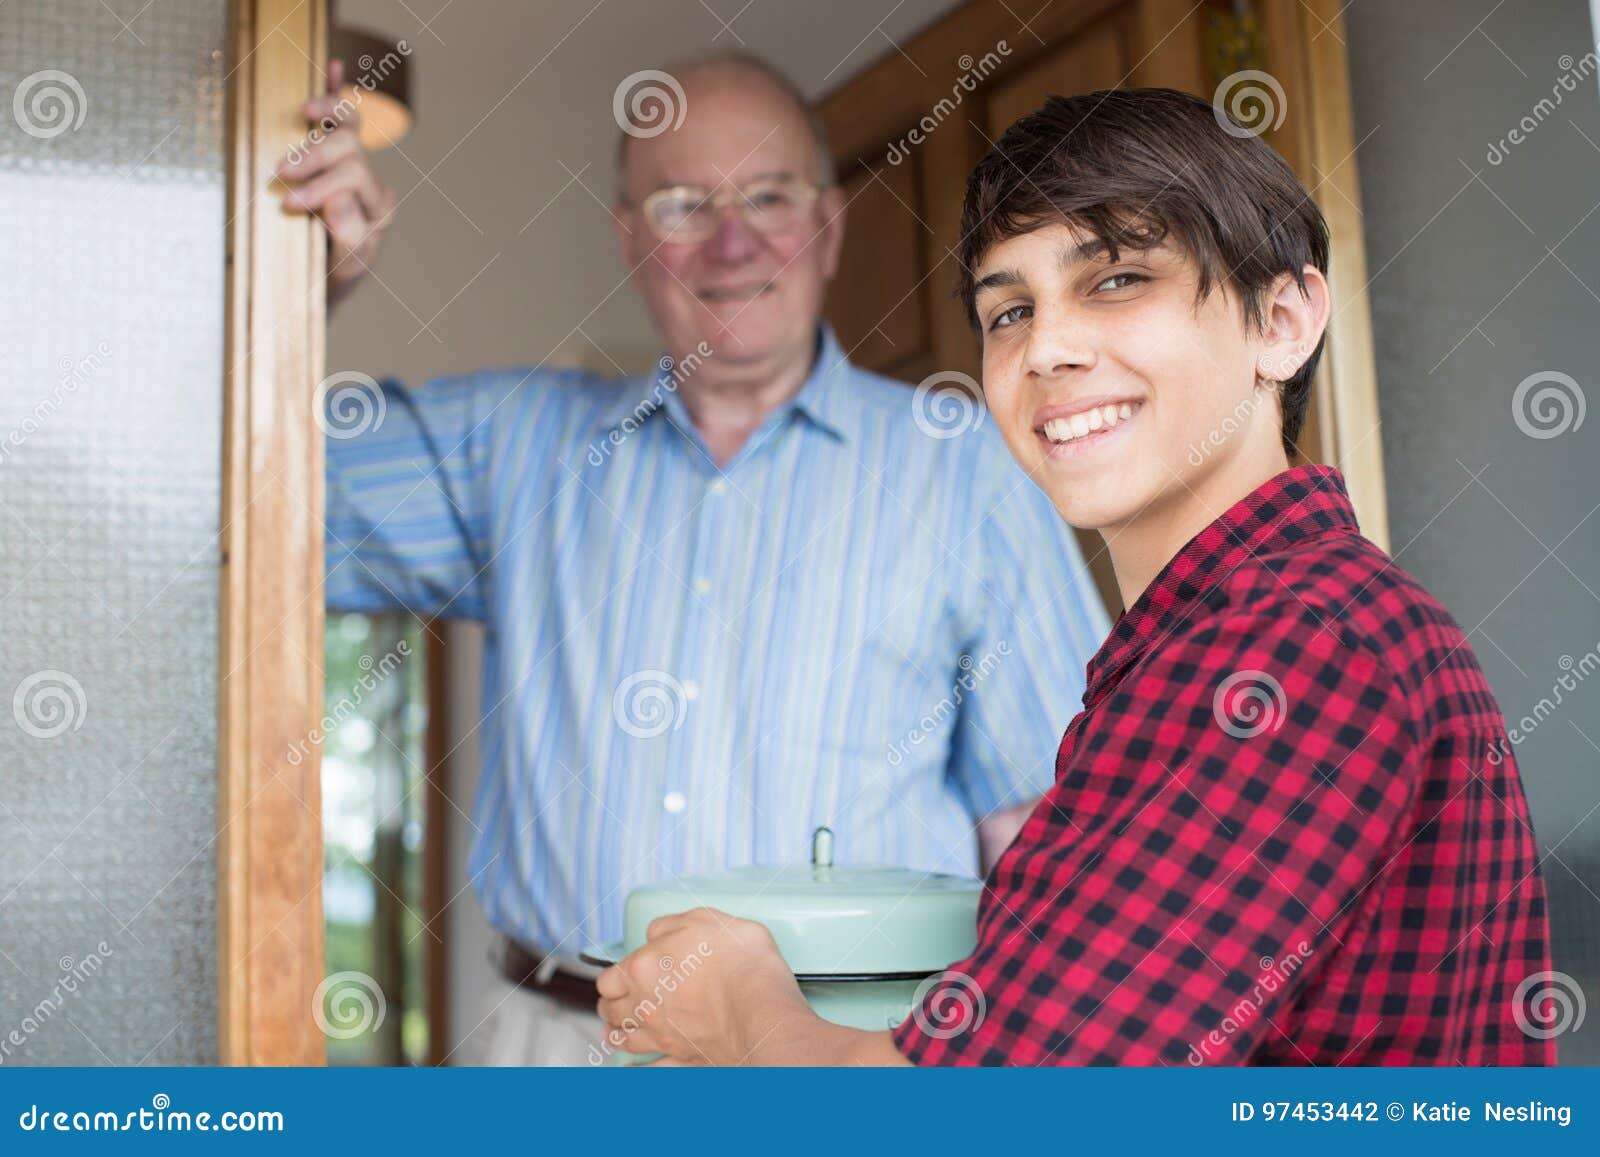 teenage boy bringing meal for elderly male neighbour